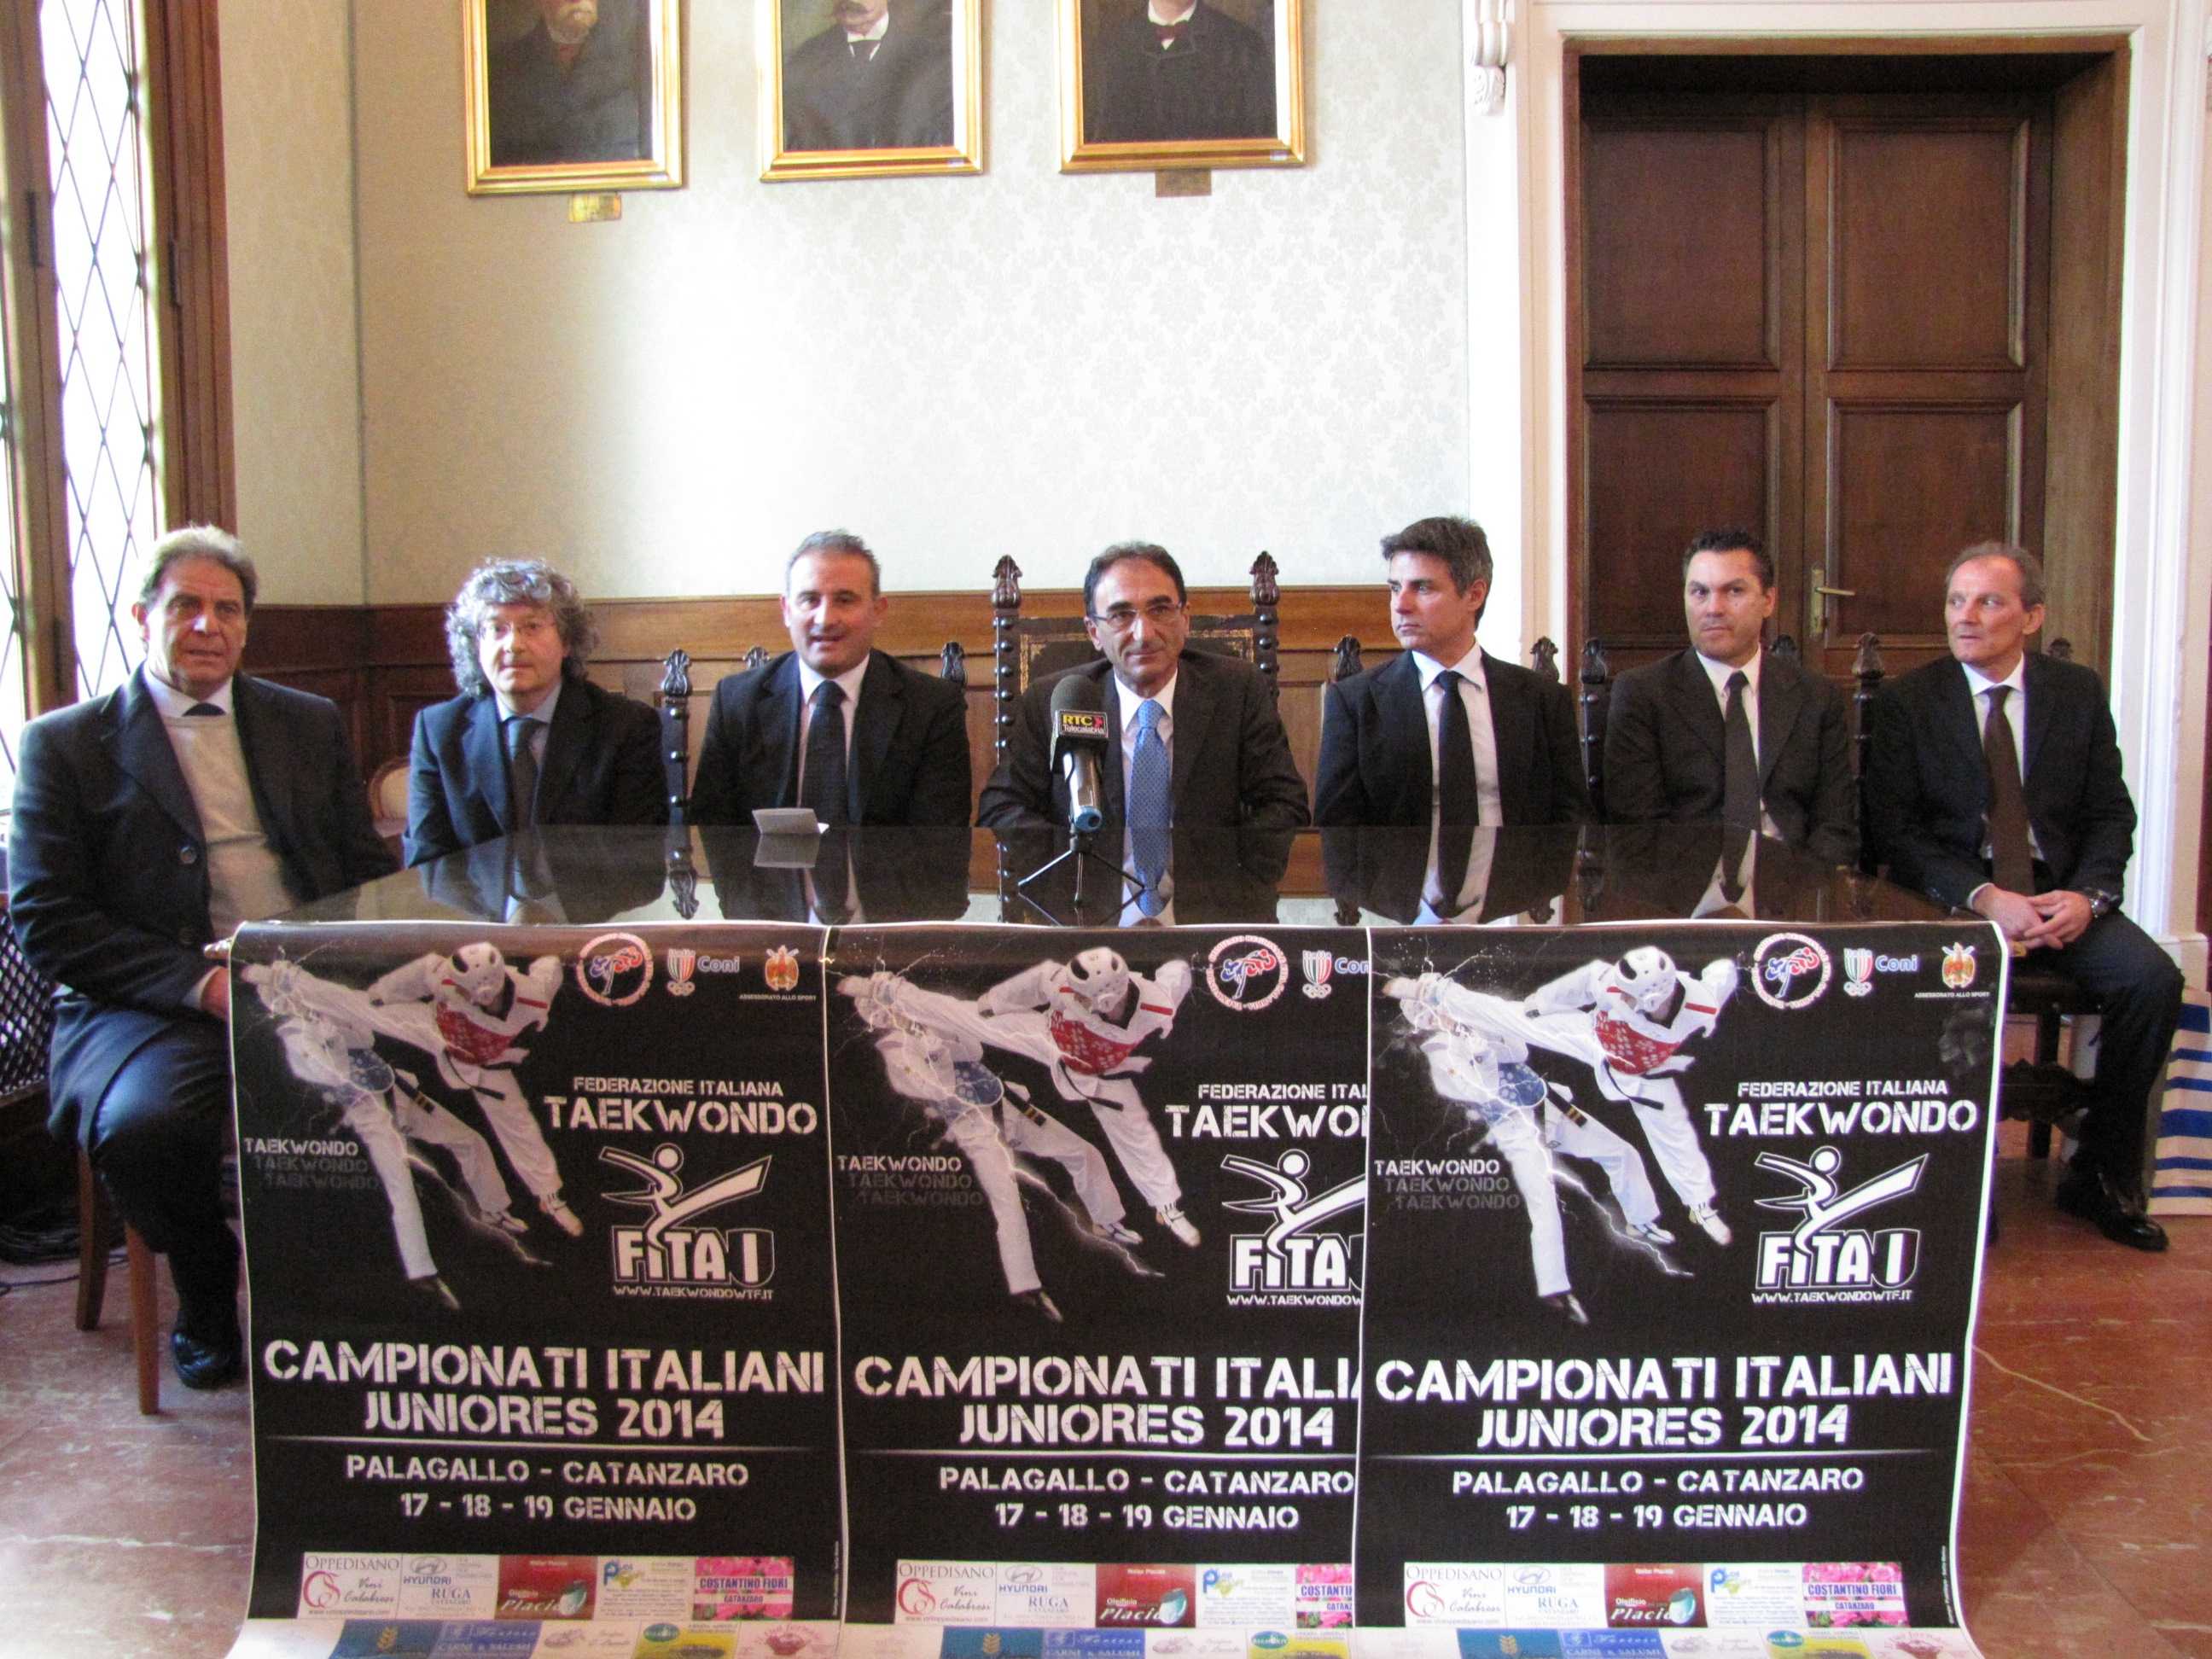 Presentati i campionati nazionali juniores di taekwondo, 300 atleti da tutta Italia